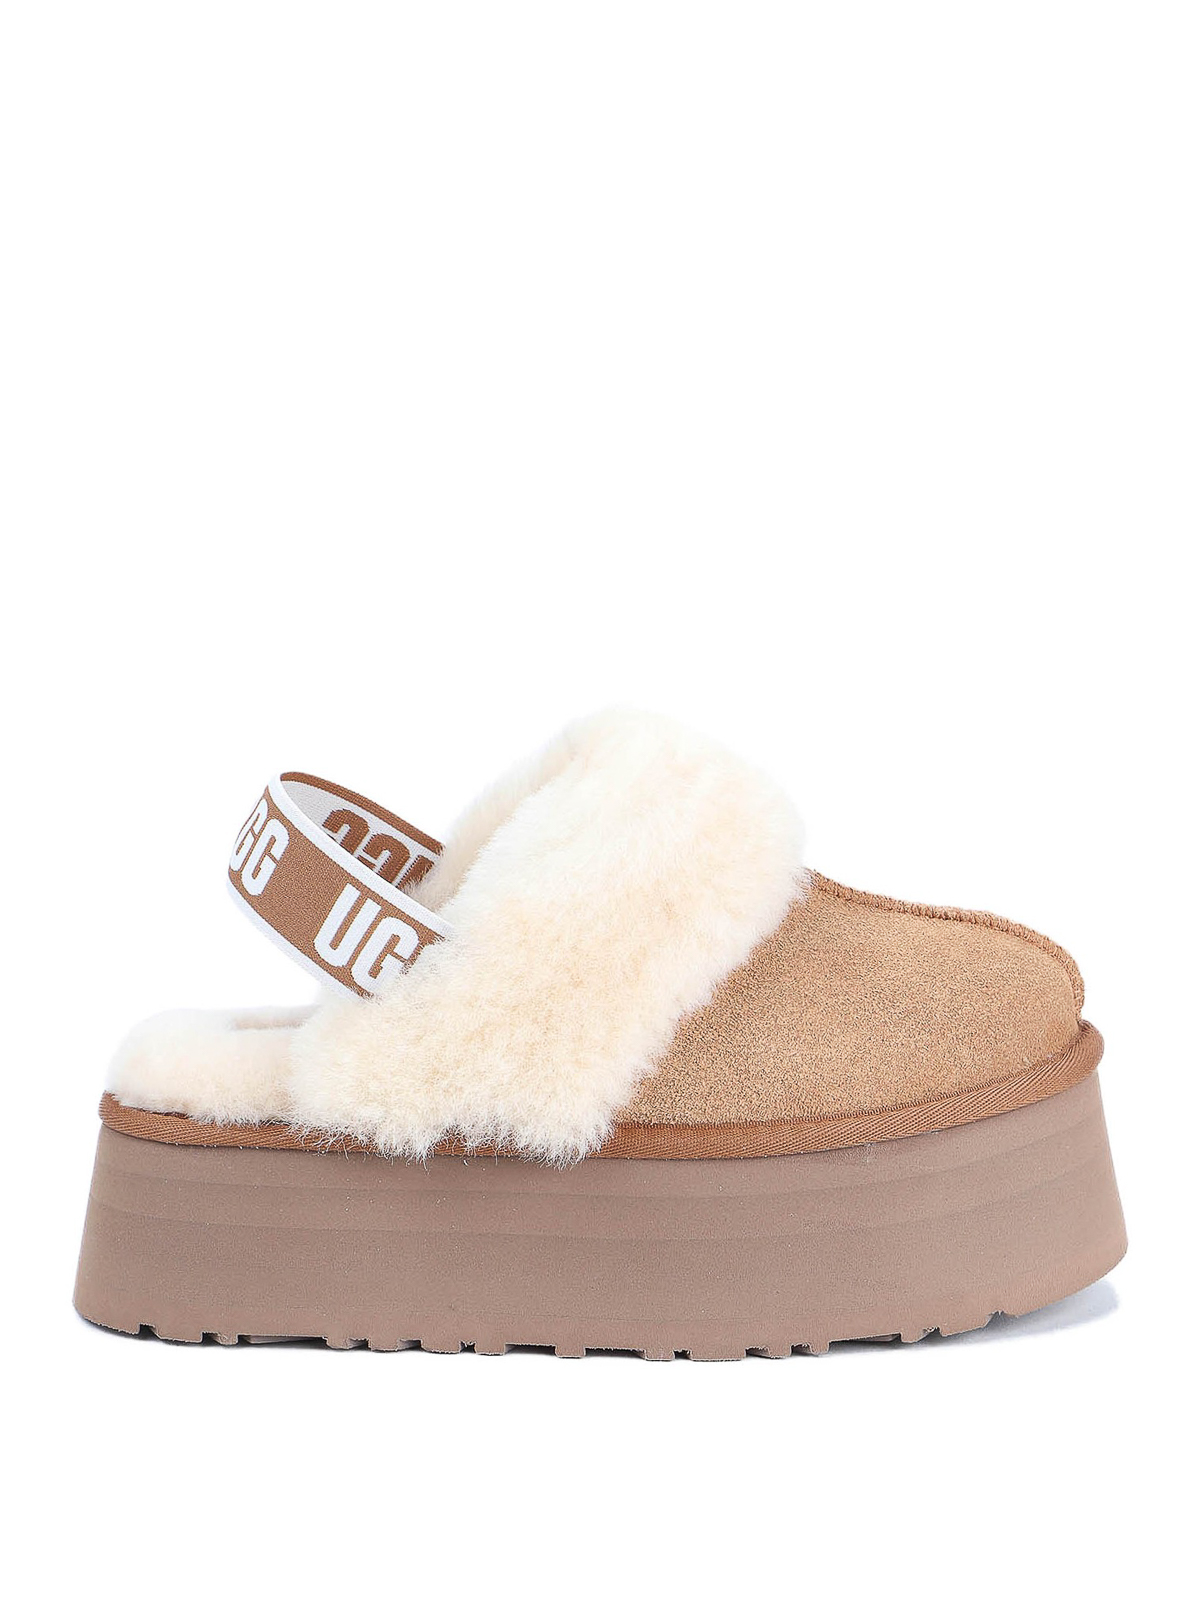 light brown ugg slippers